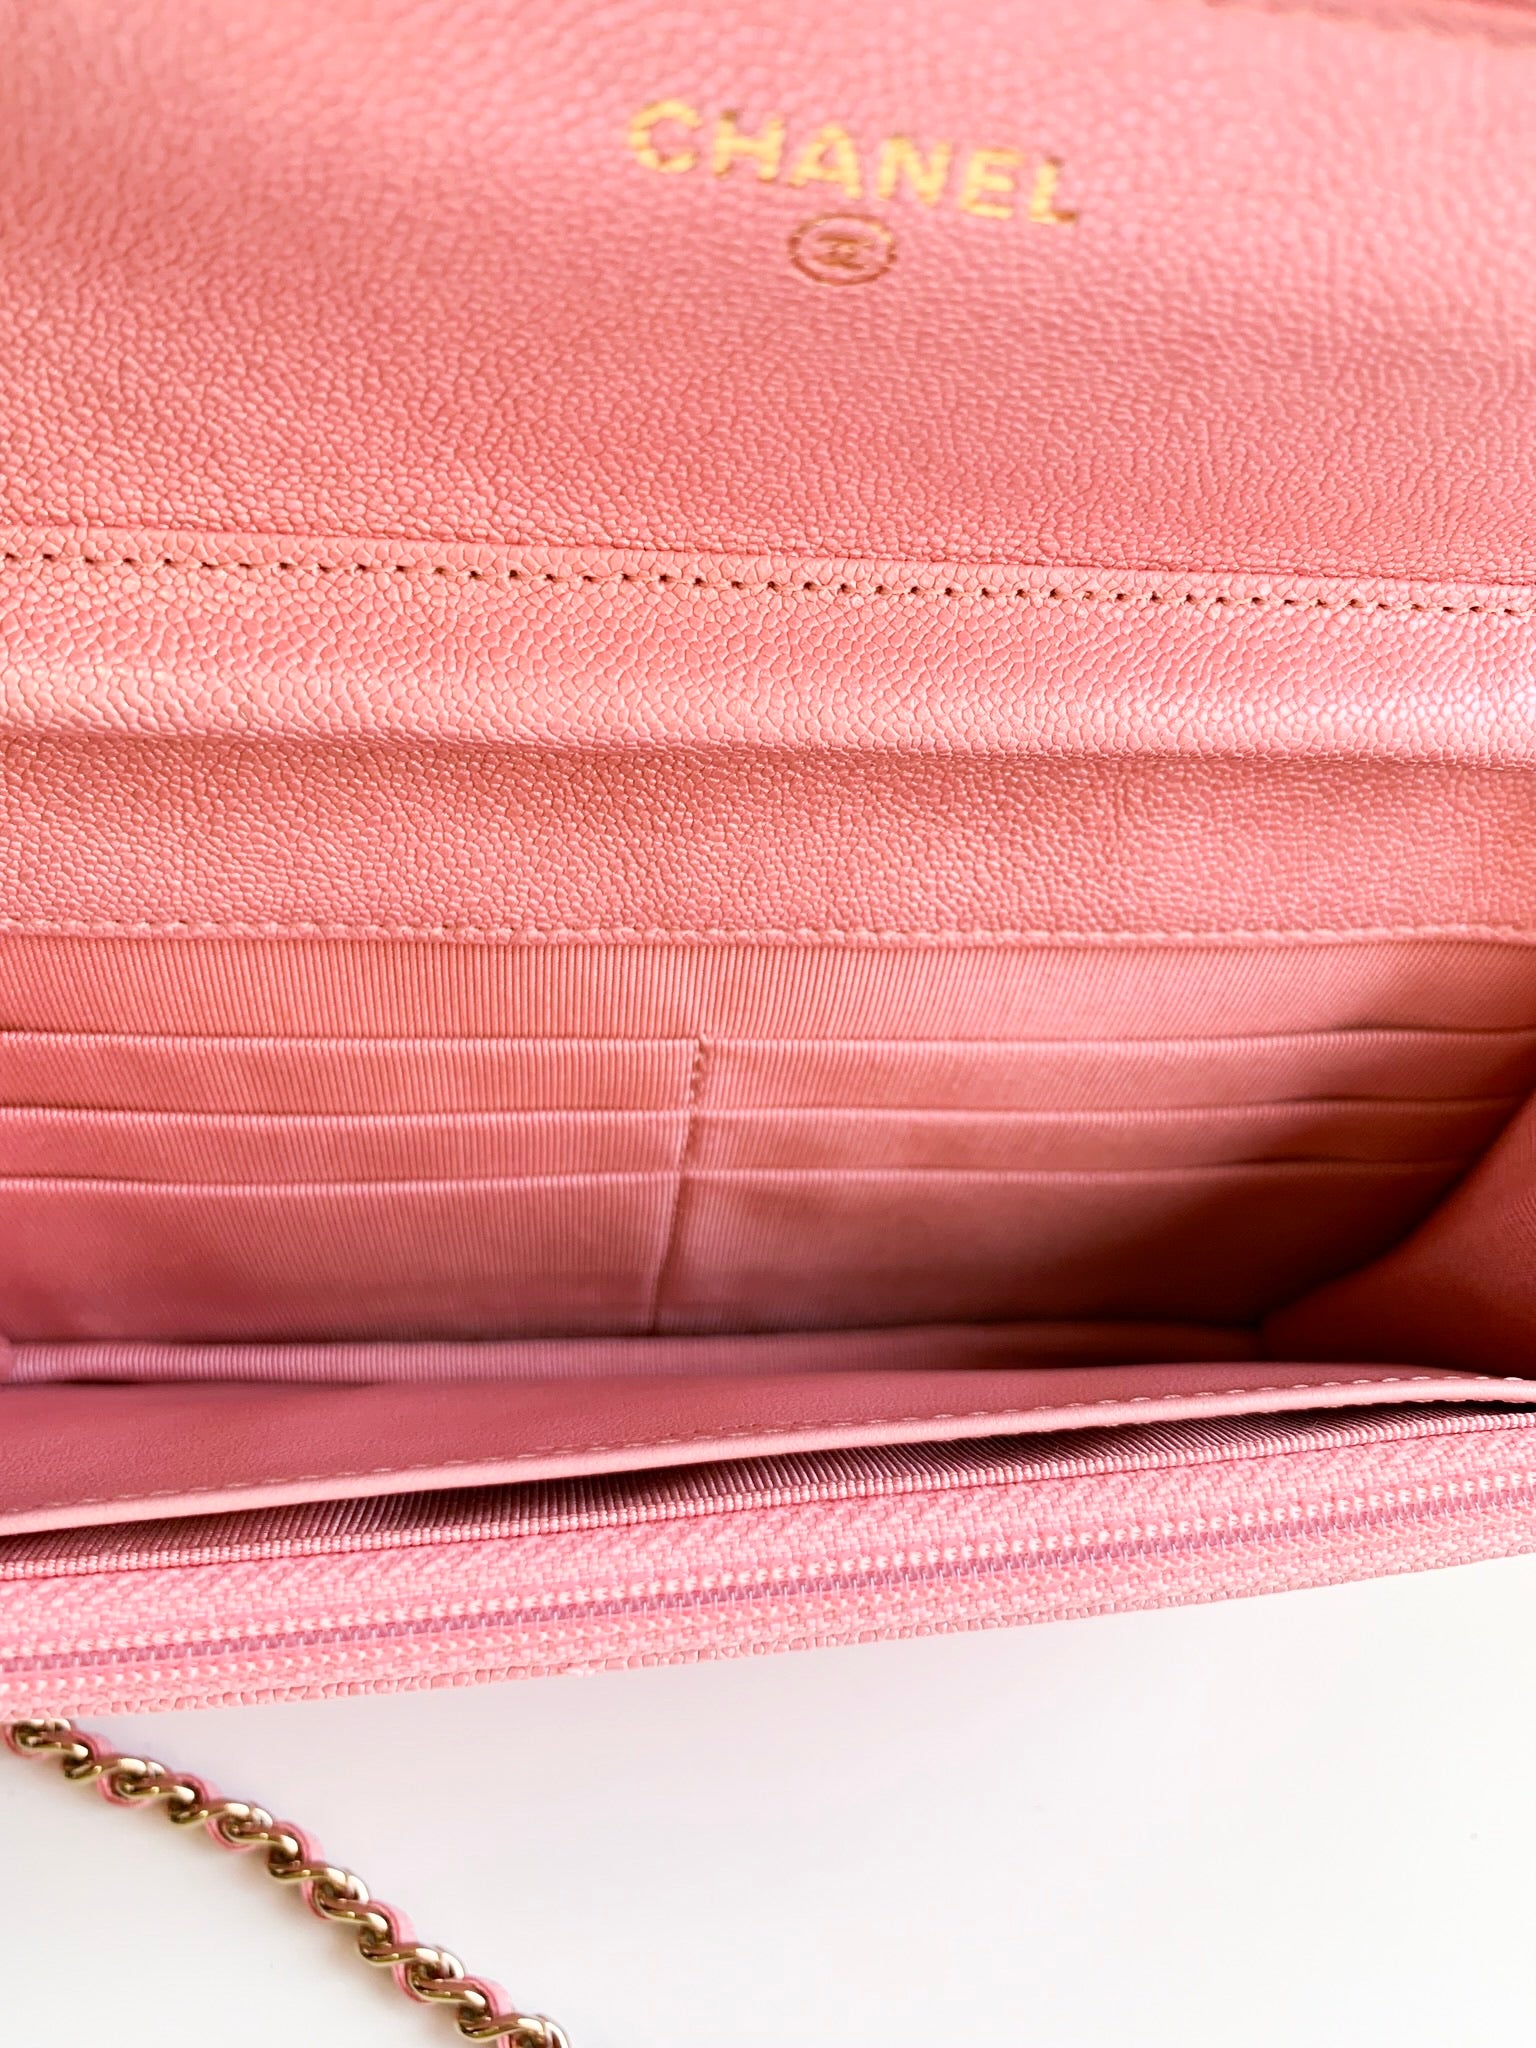 Chanel 19C Barbie Pink Caviar Medium Classic Flap Bag | Dearluxe